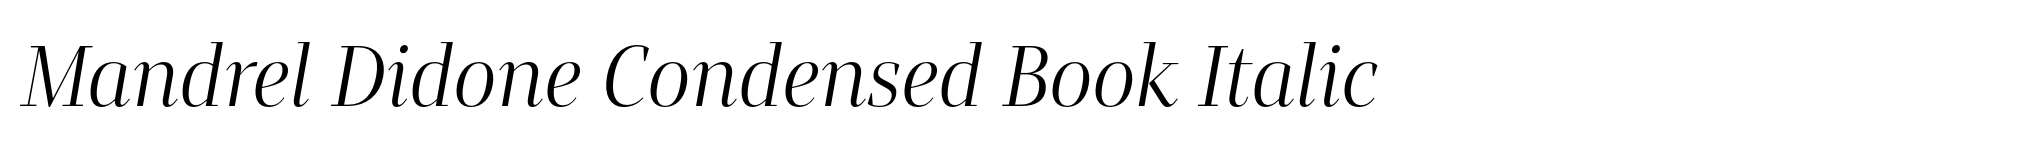 Mandrel Didone Condensed Book Italic image